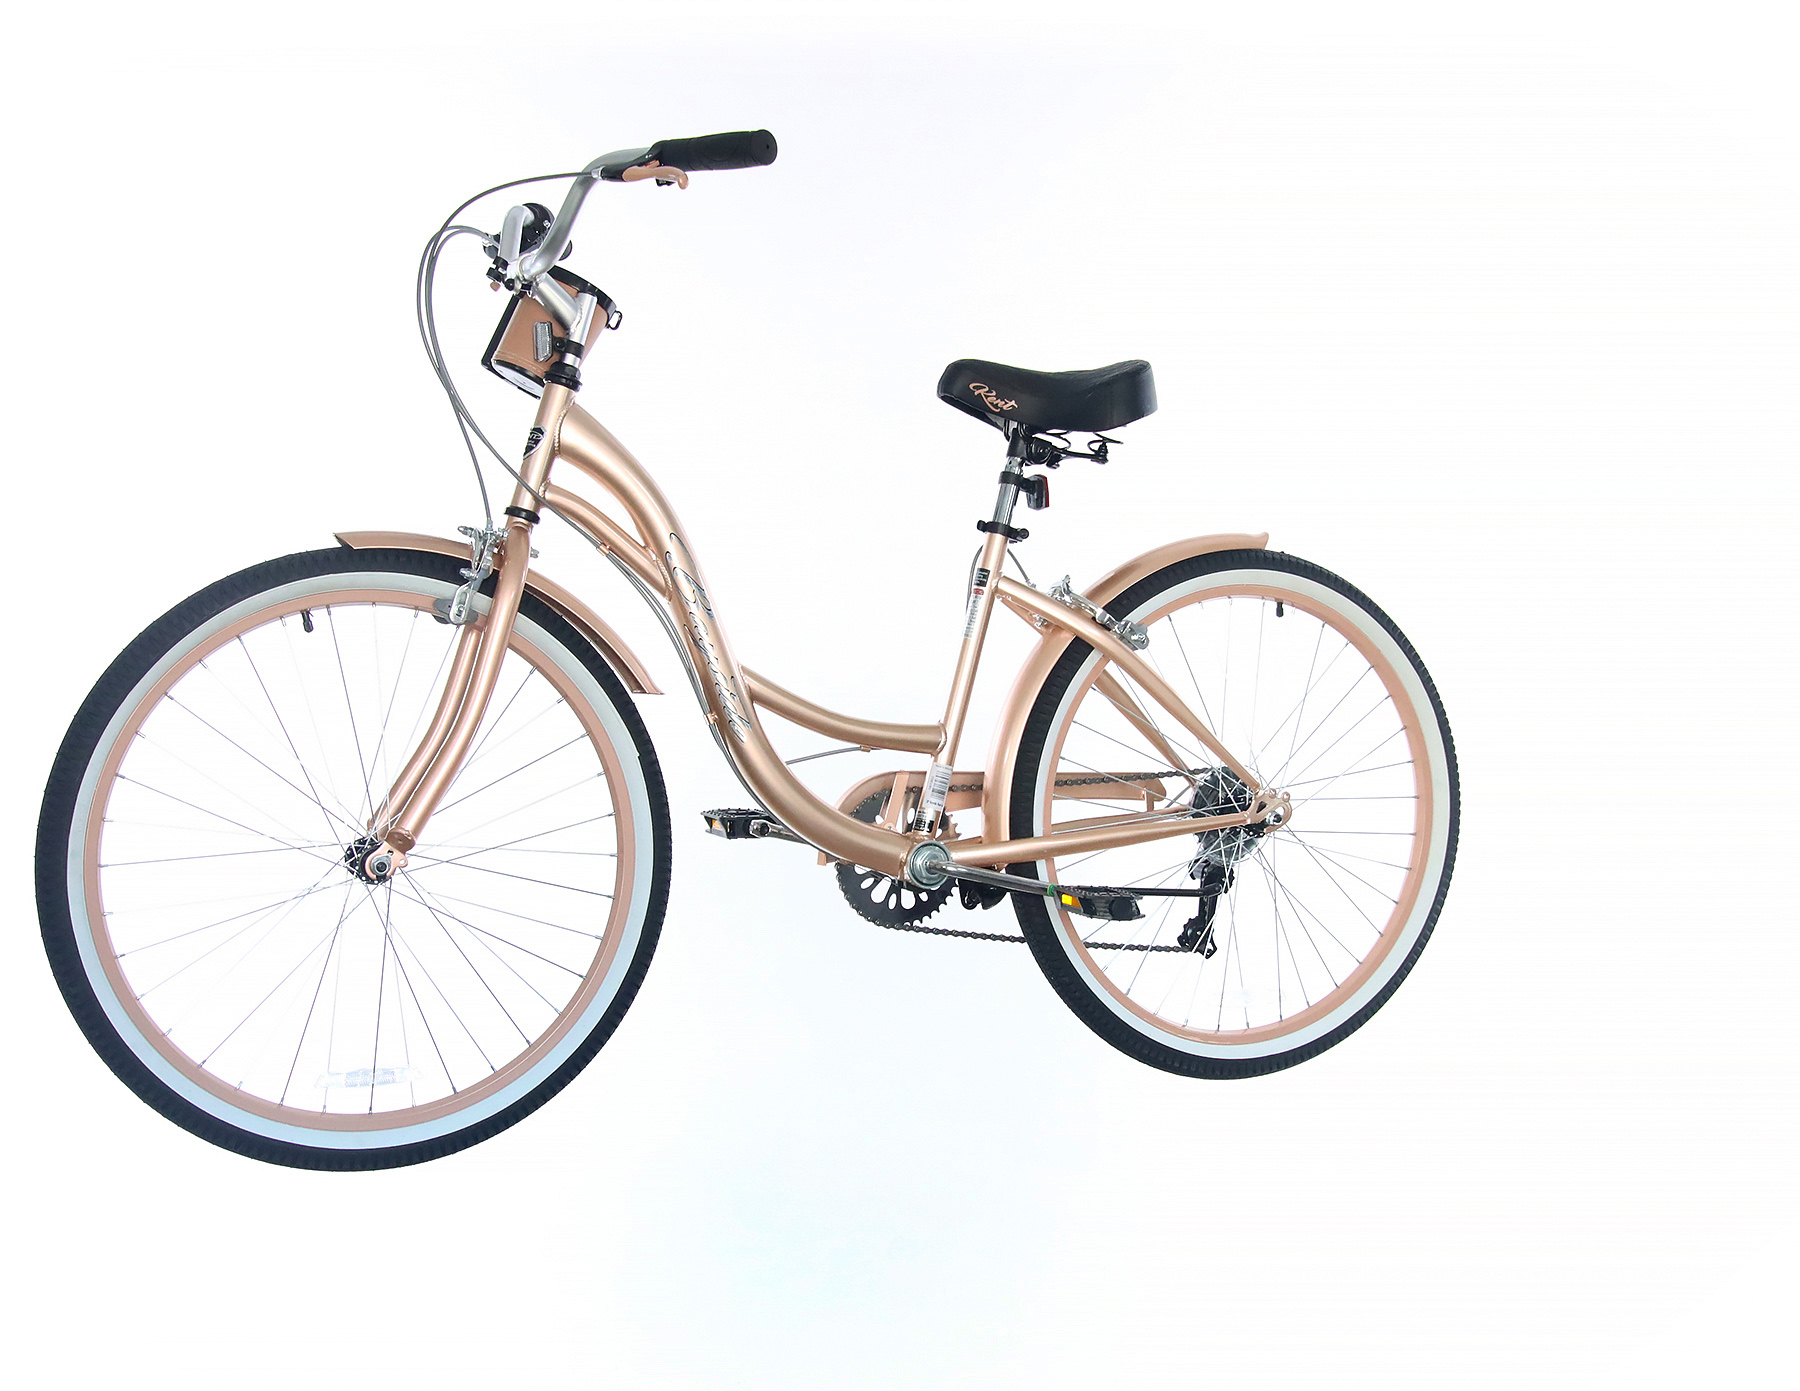 Rose Gold New Kent 72653 26 inch Bayside Cruiser Bike 